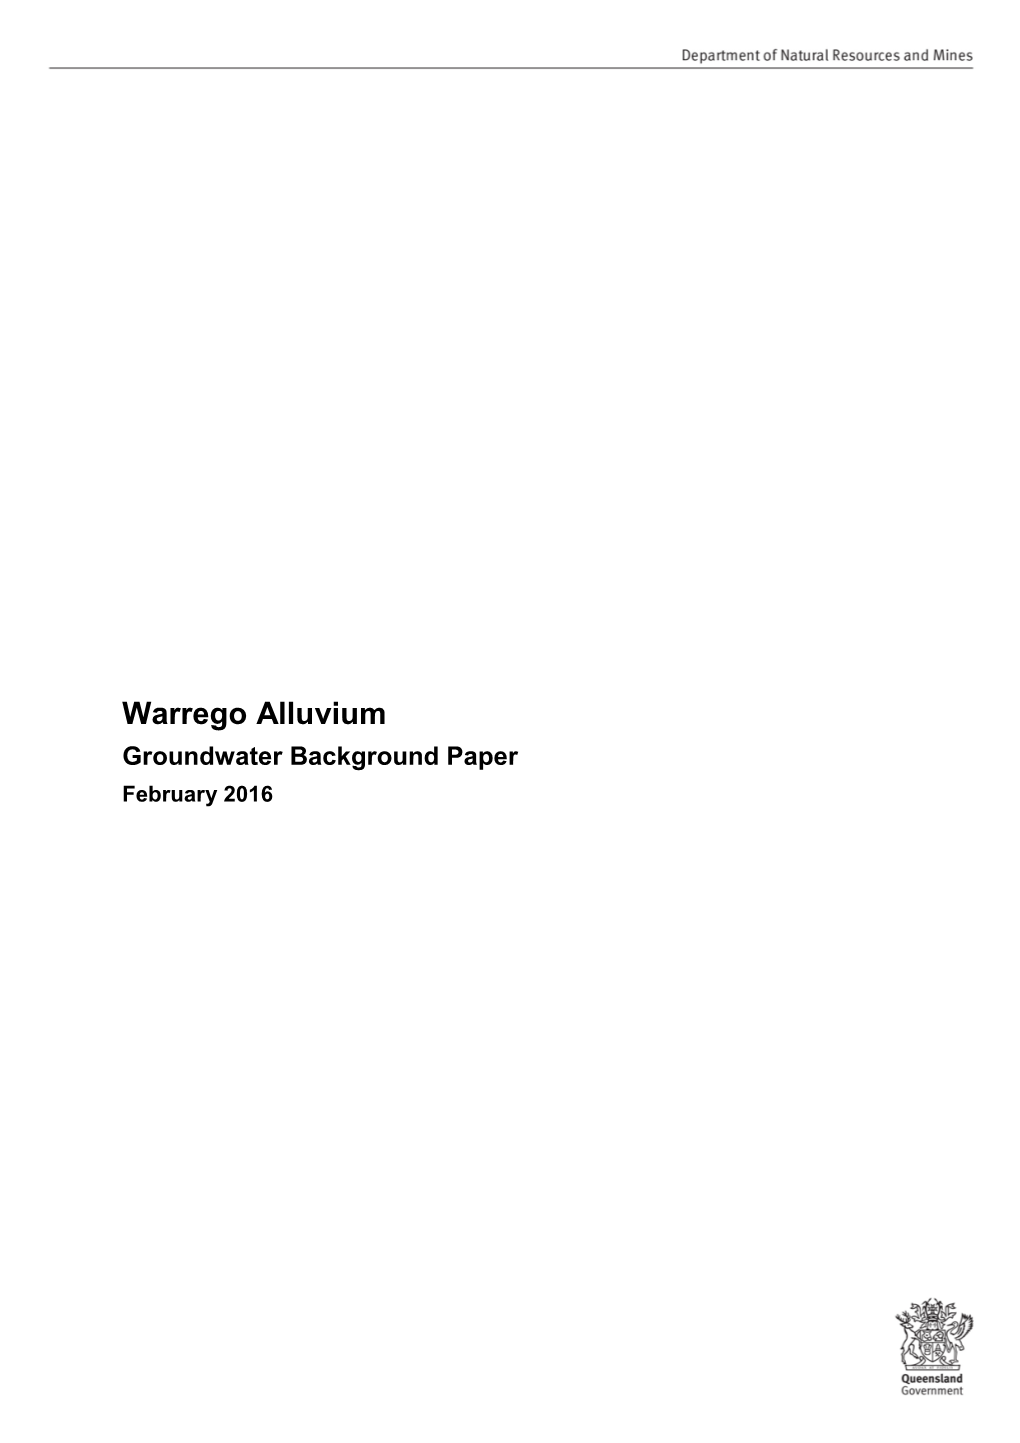 Warrego Alluvium Groundwater Background Paper February 2016